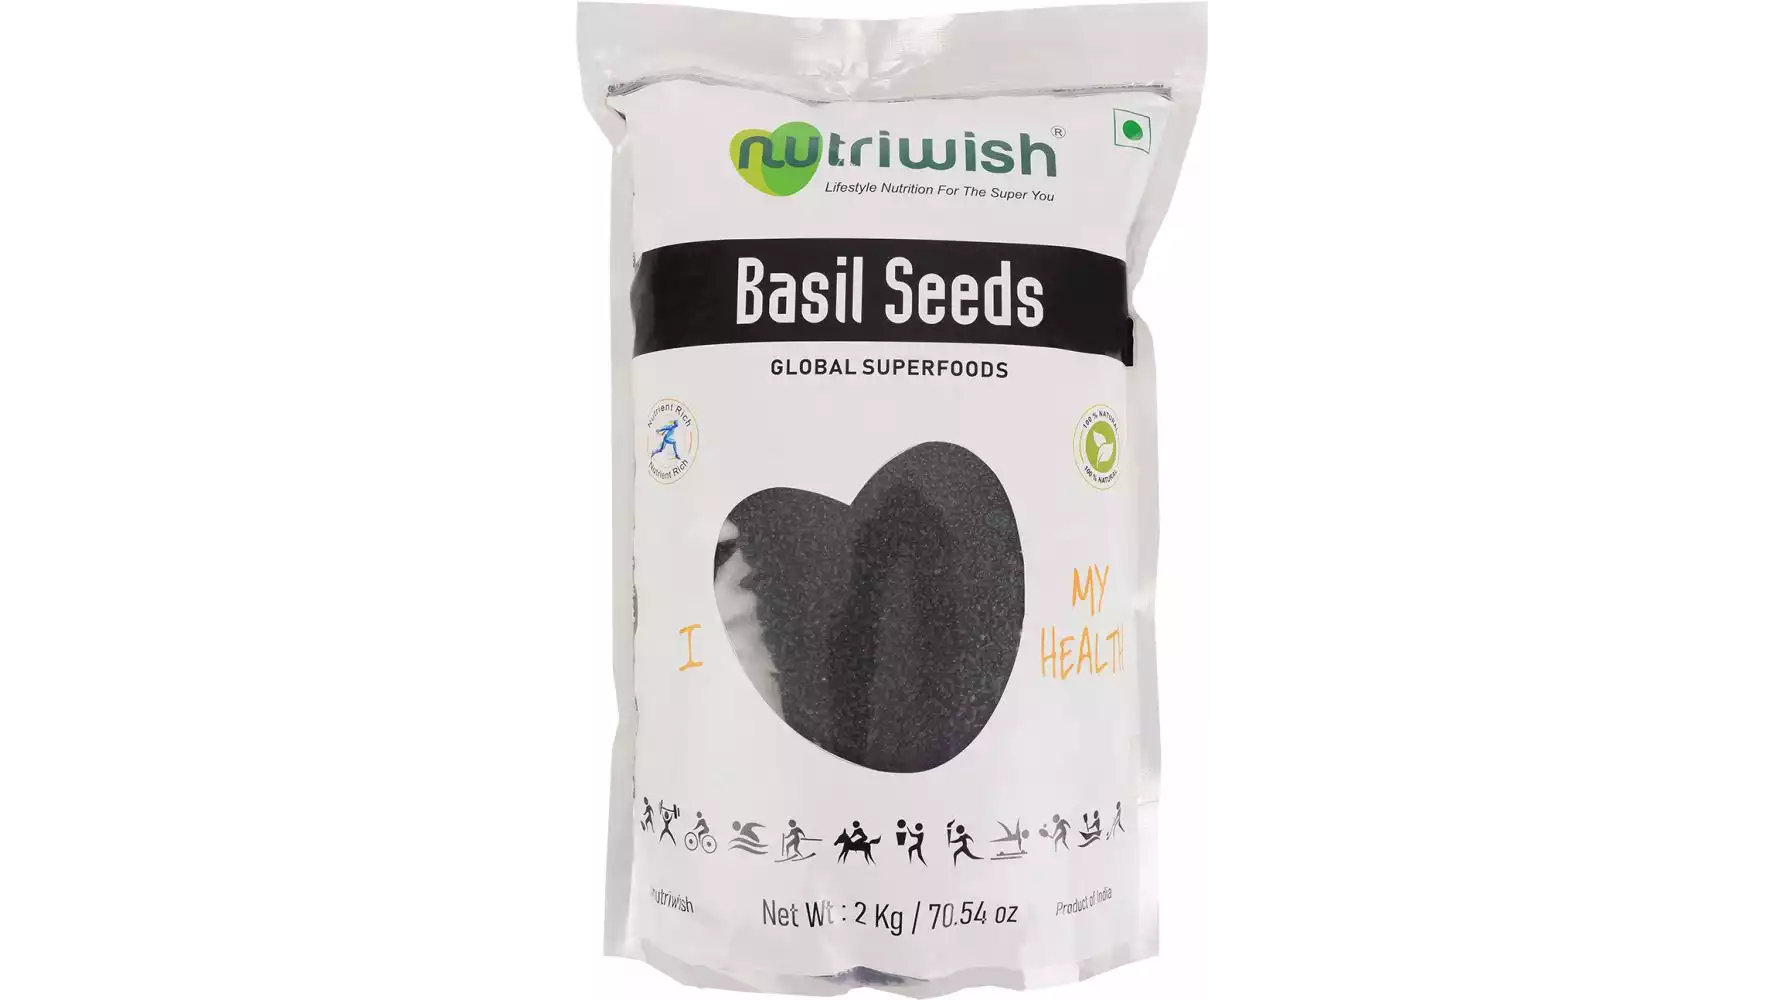 Nutriwish Basil Seeds (2kg)